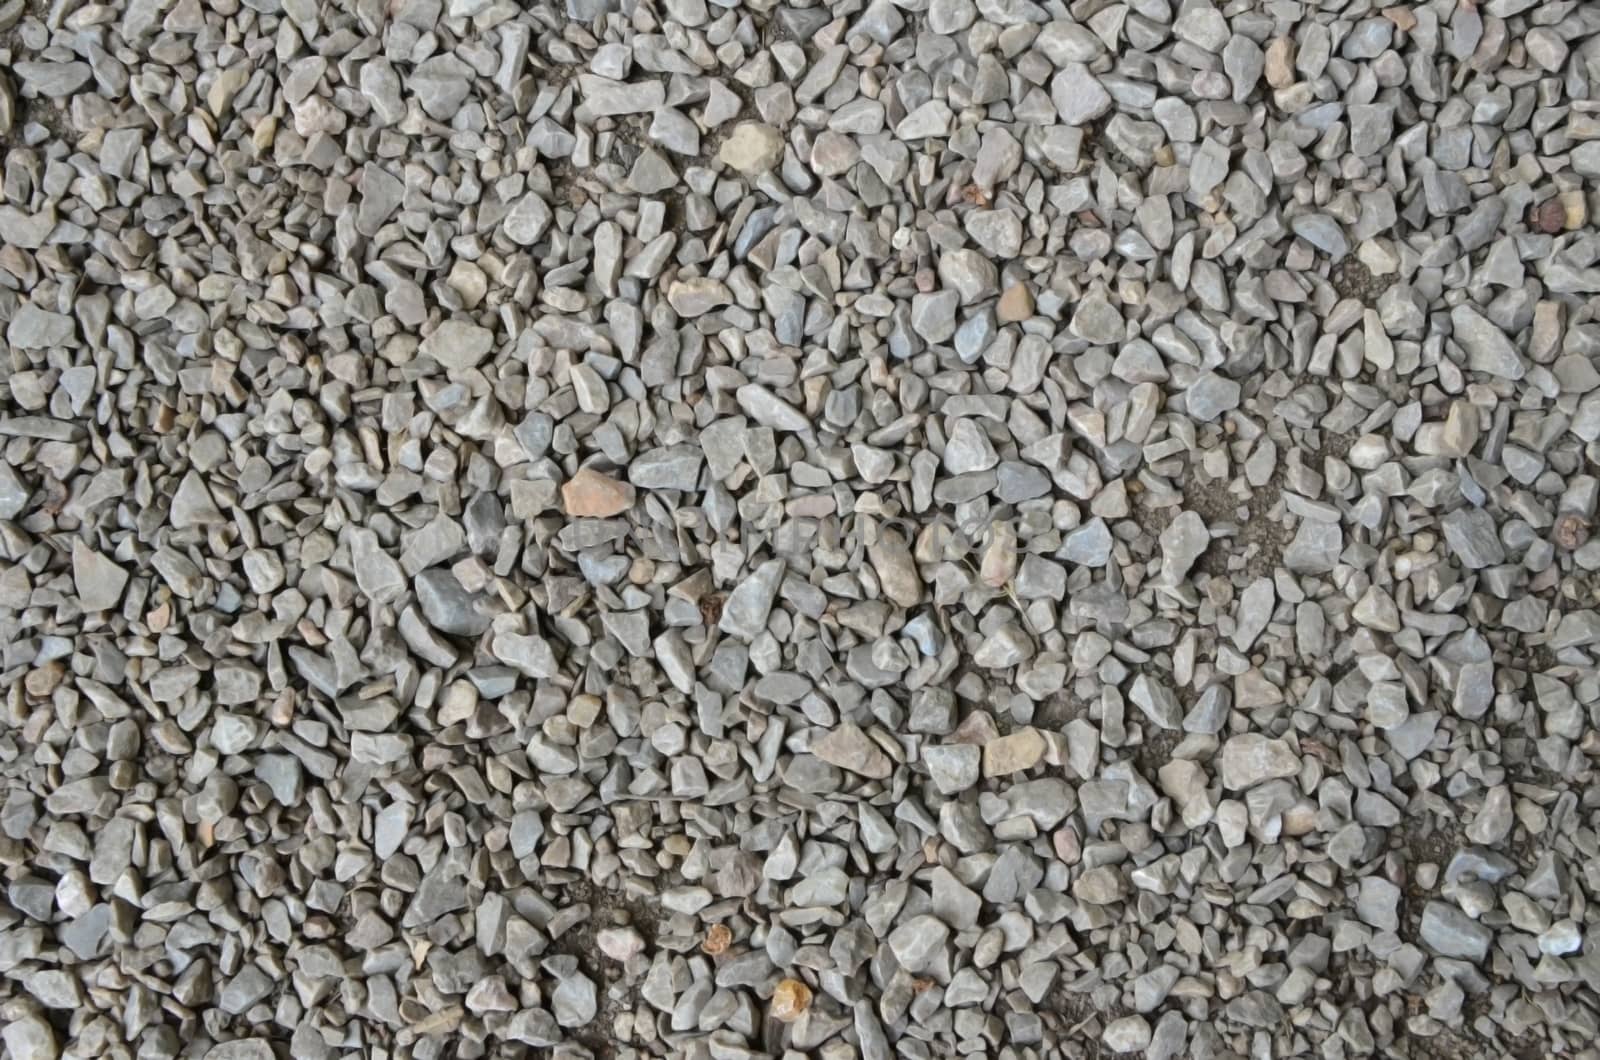 Dirty Stone Ground